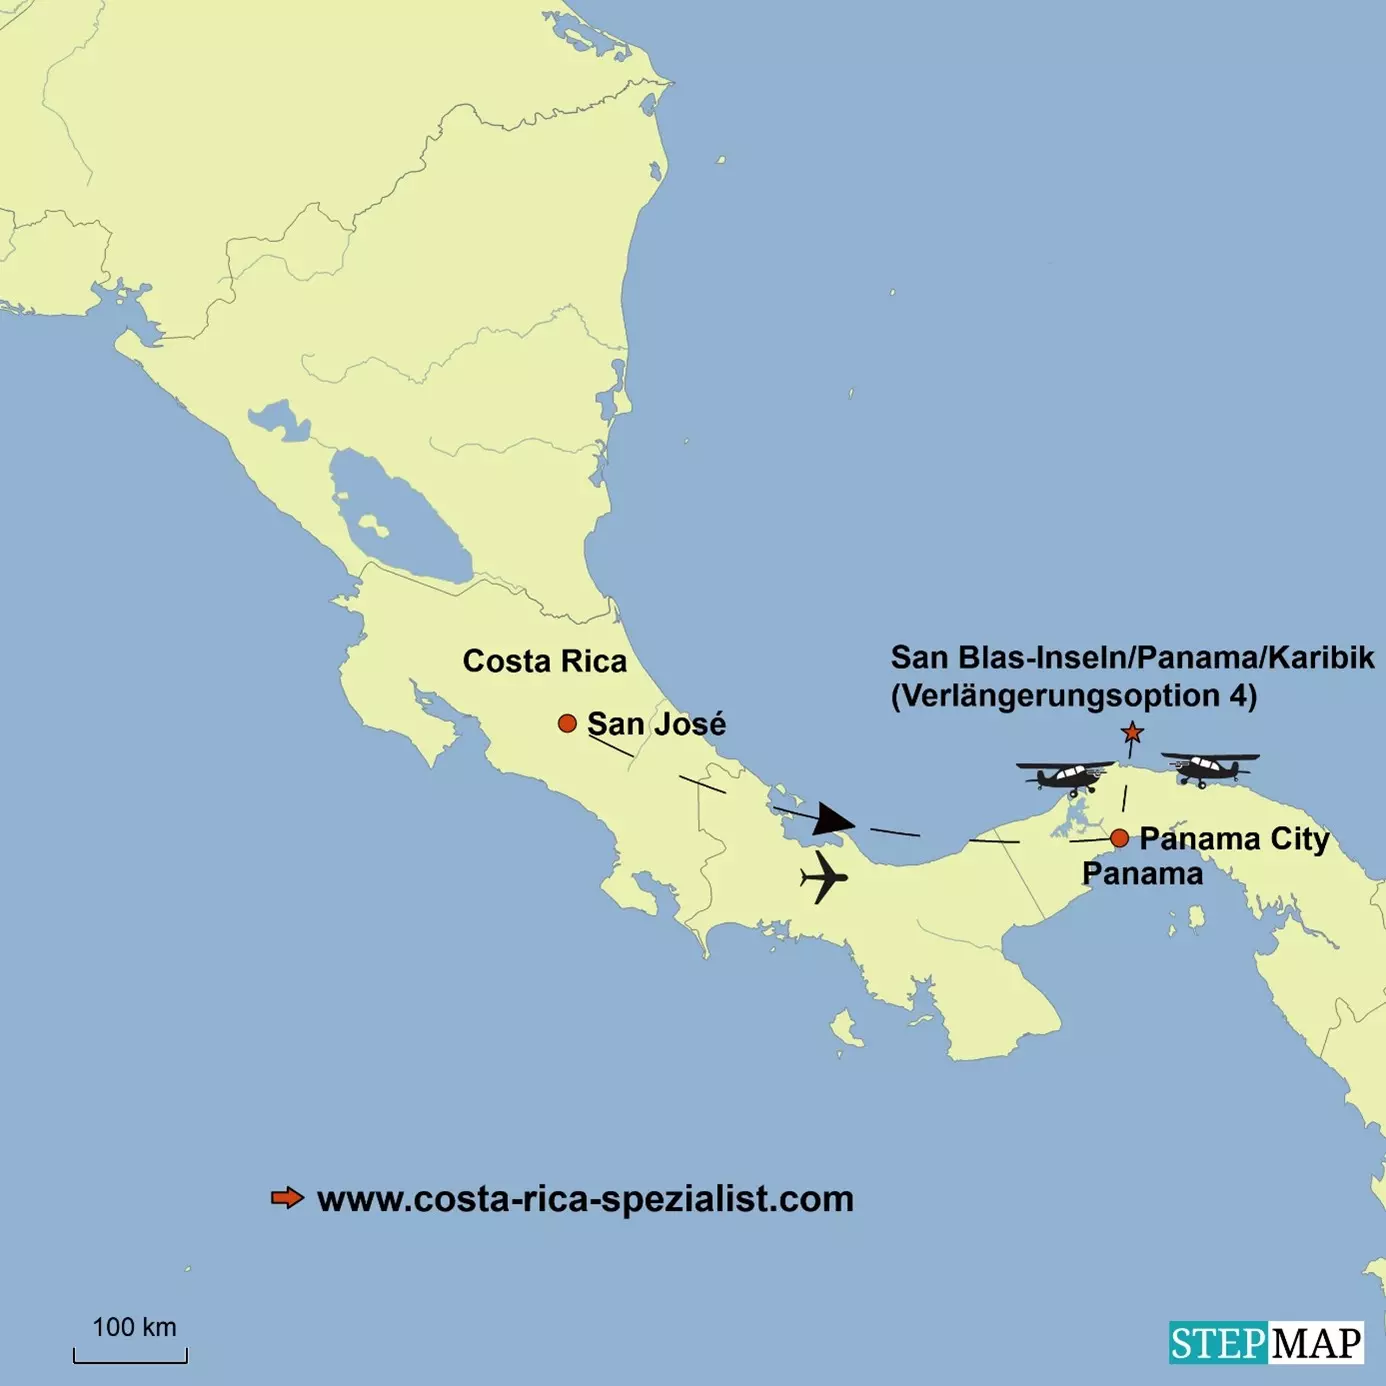 San Blas-Inseln / Panama / Karibik (Verlängerungsoption 4)